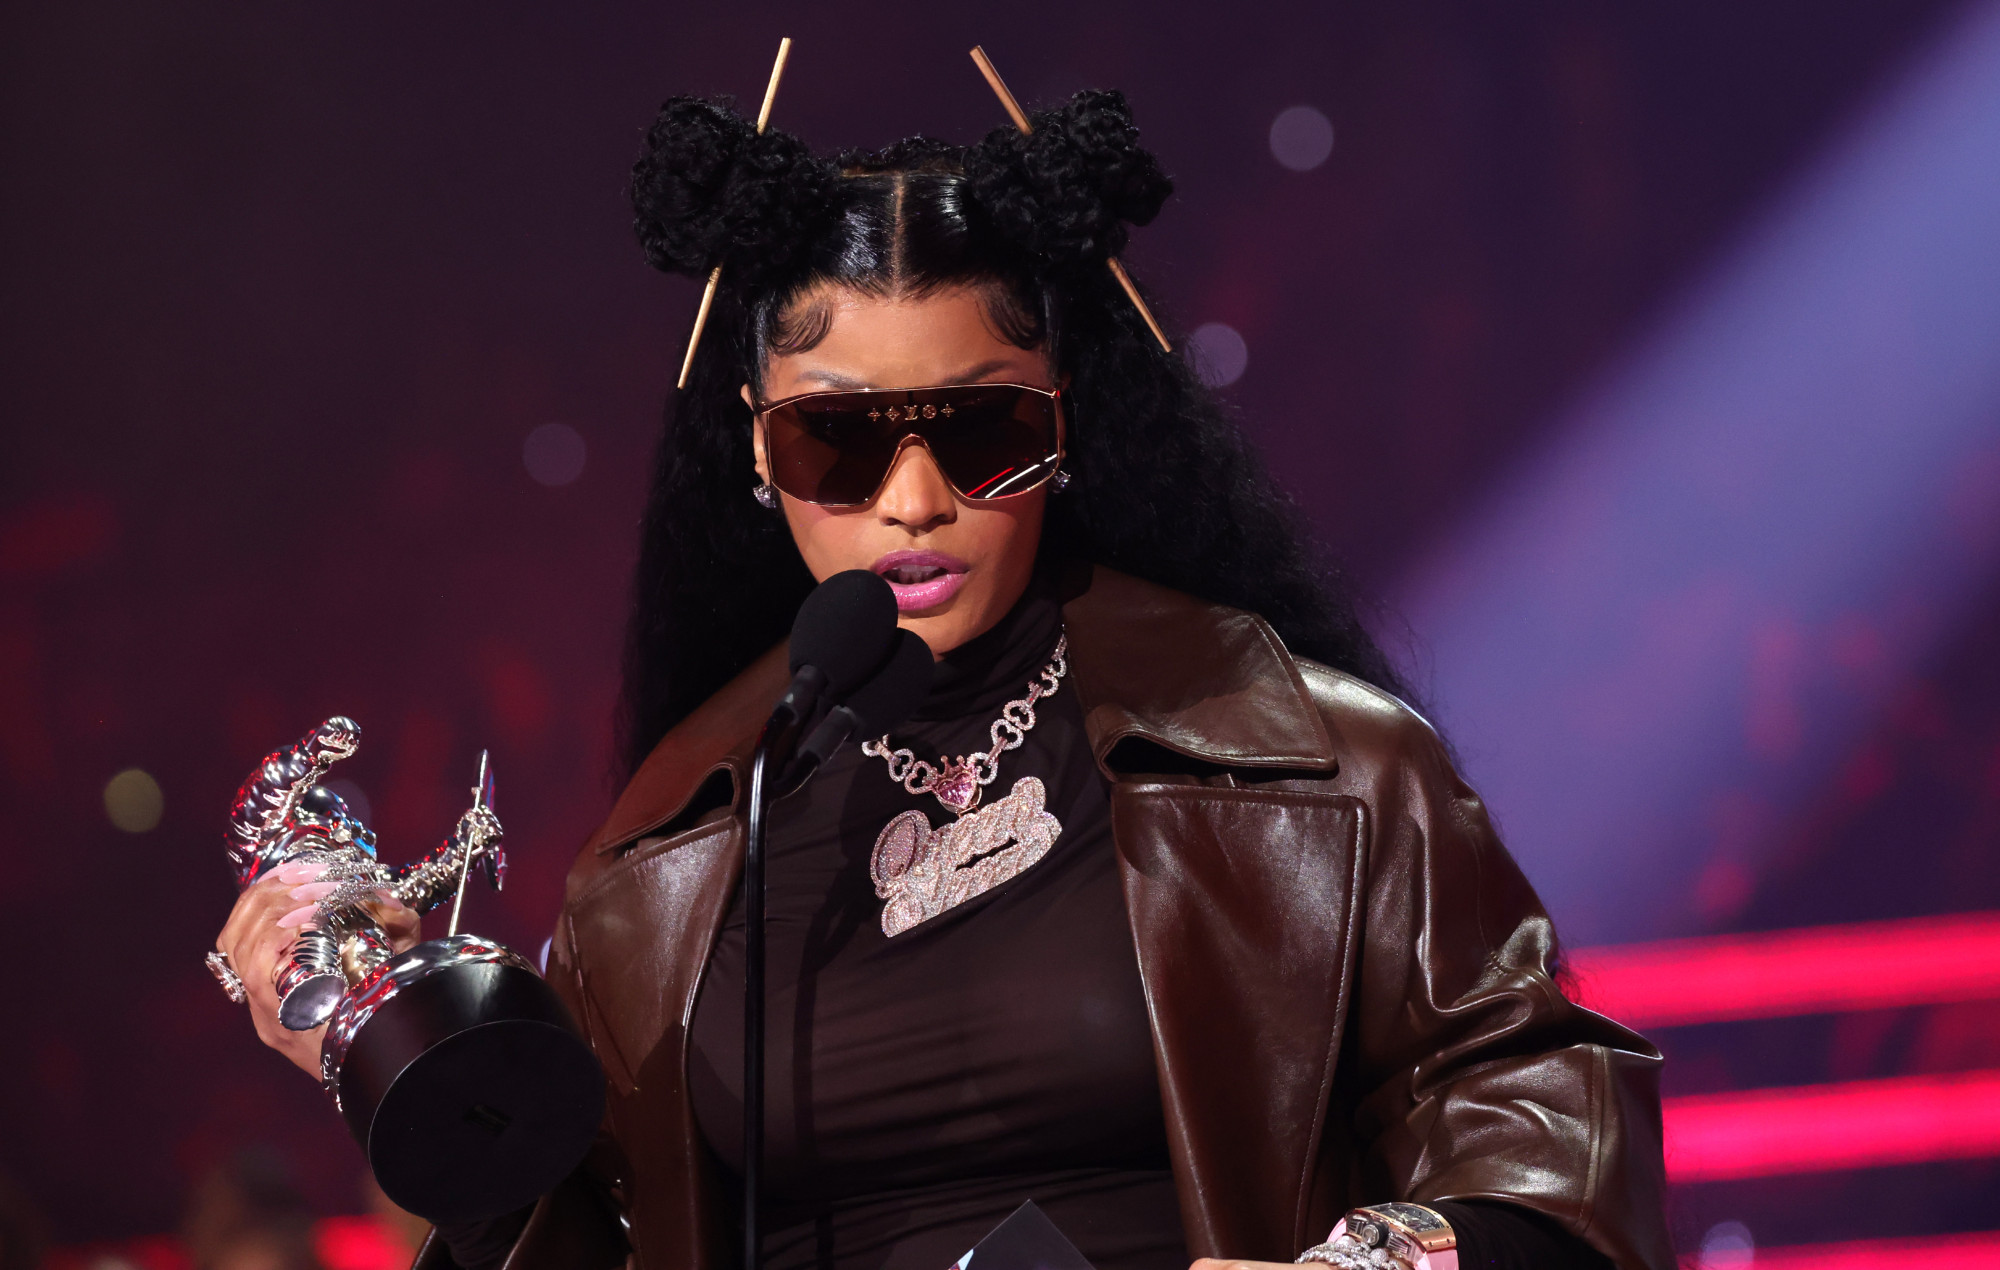 Nicki Minaj thinks social media is forcing “false realities” upon young people